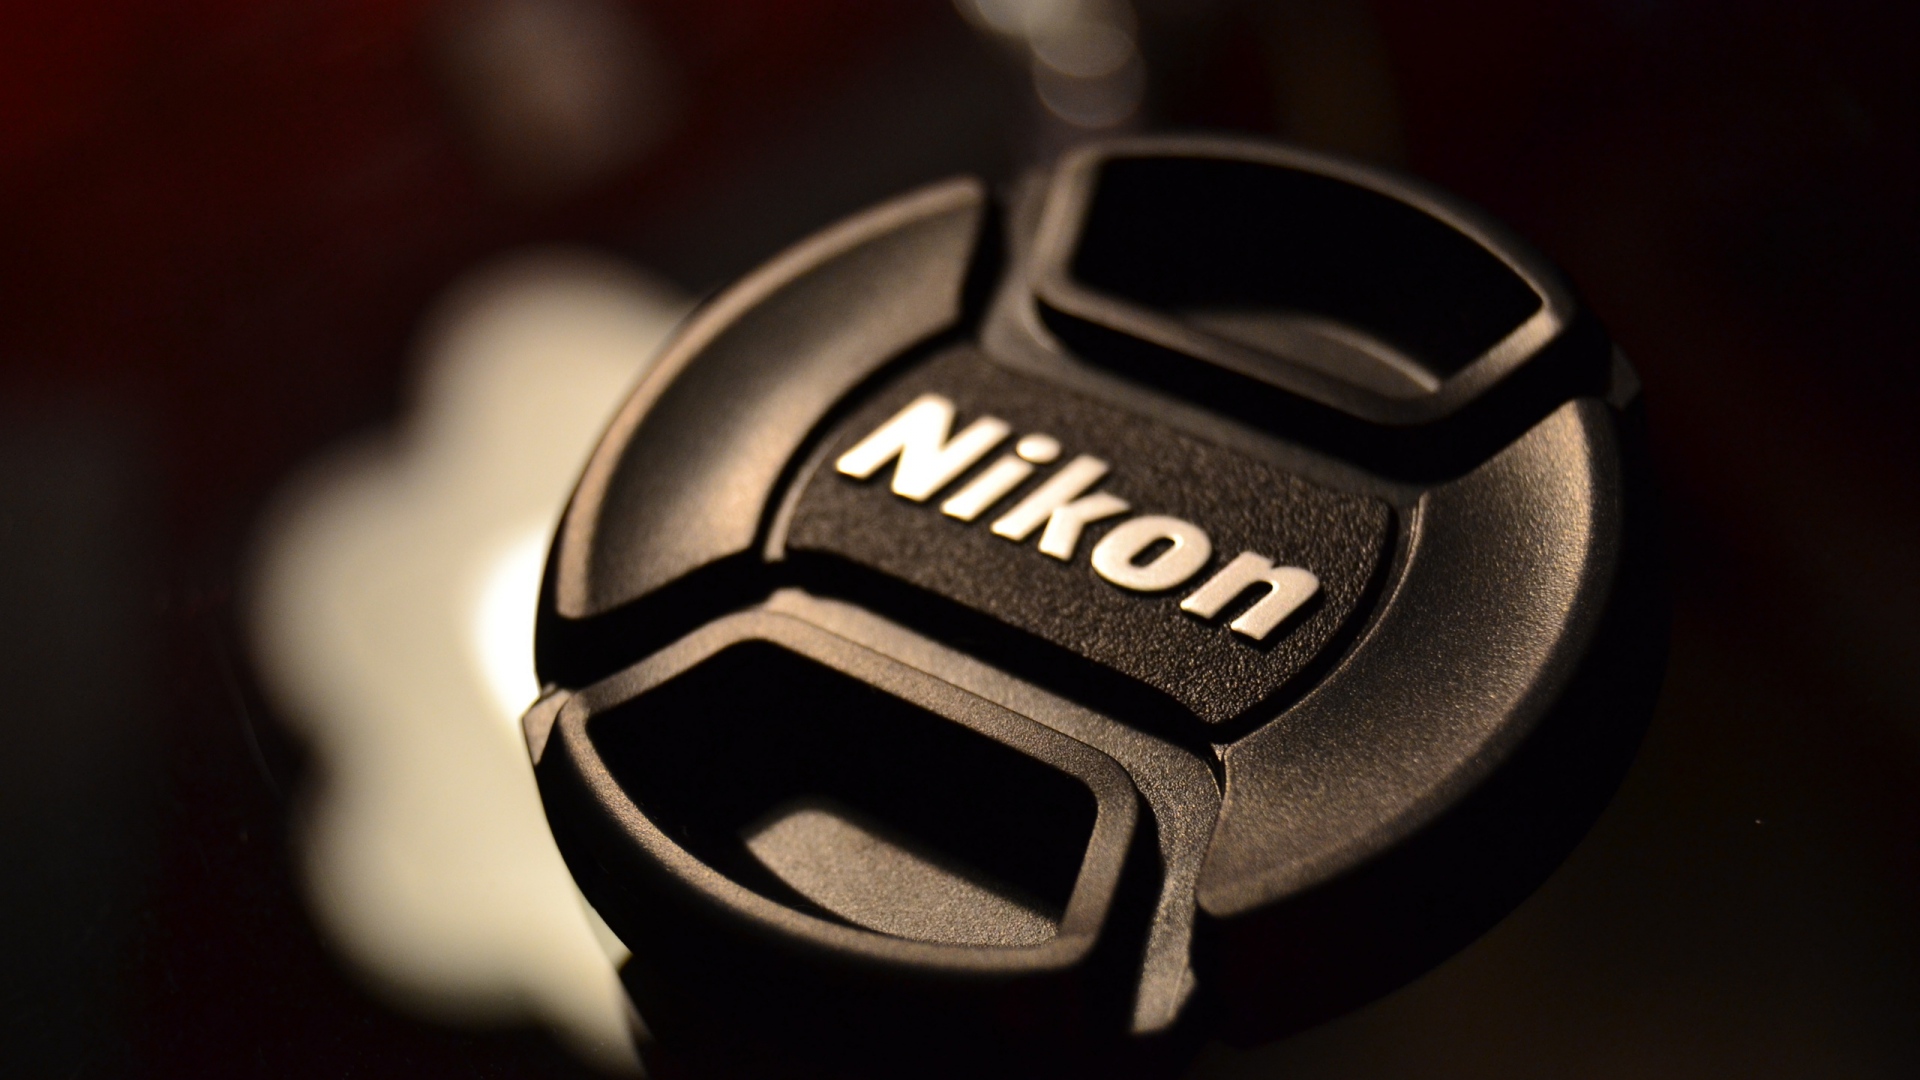  Nikon anunță dezvoltarea unui mirrorless full-frame